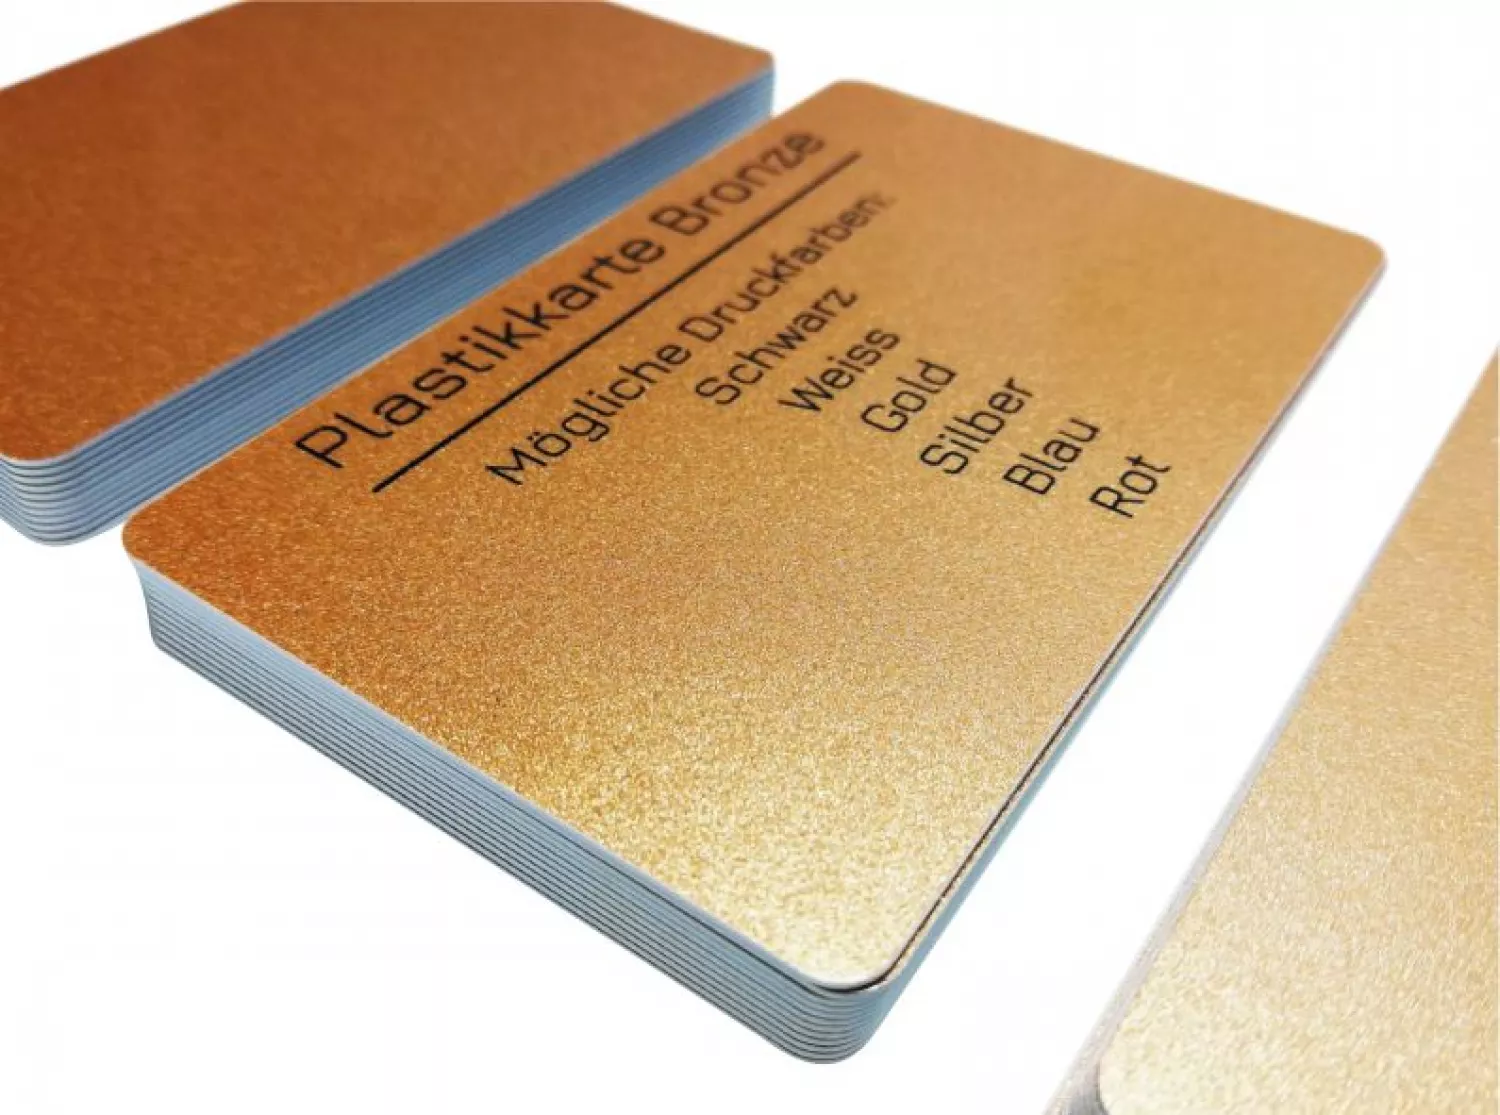 plastic card bronce